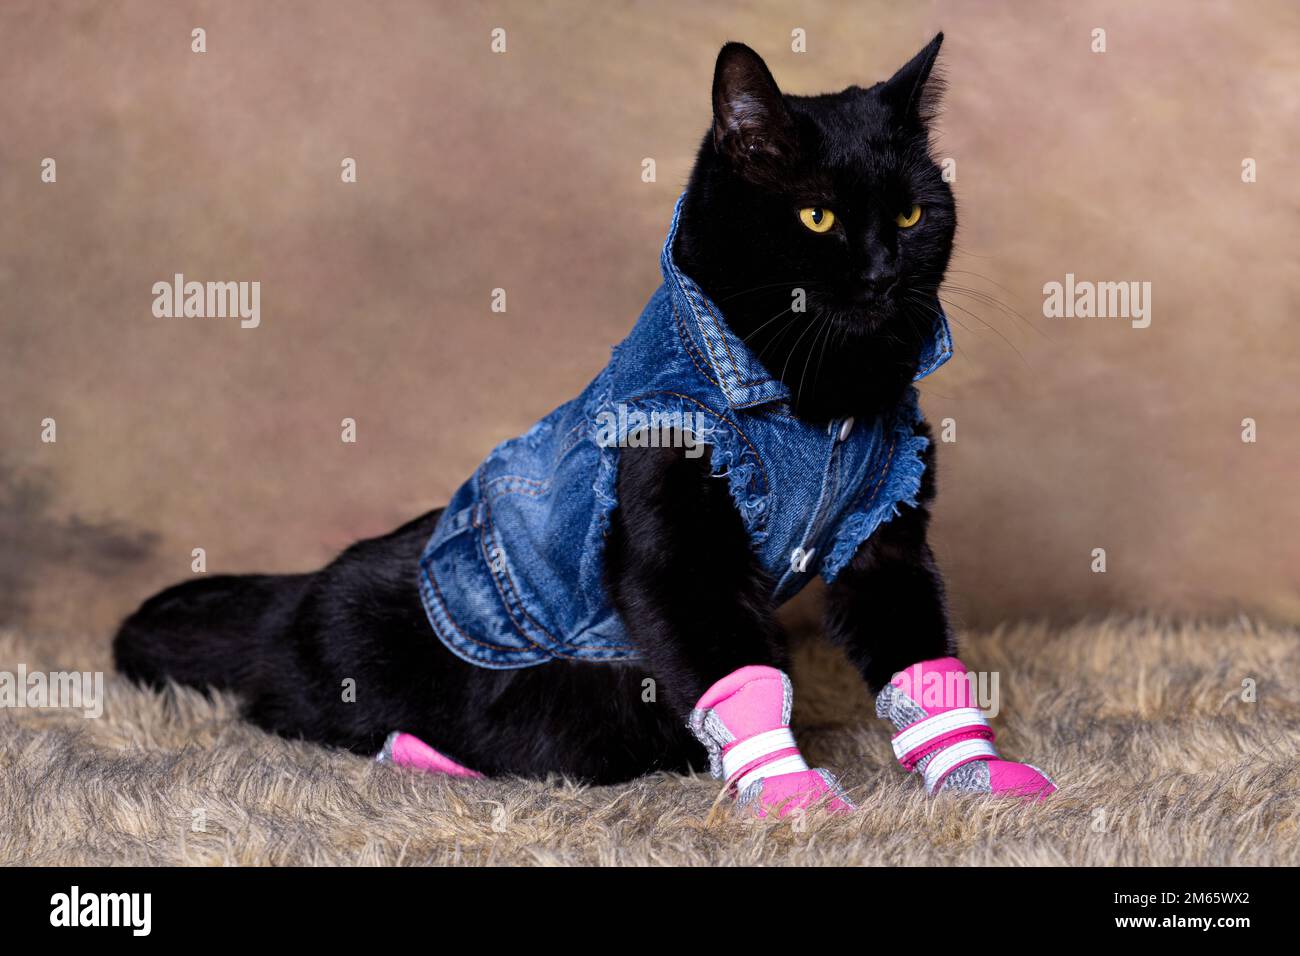 Black cat in blue jean jacket posed like a fashion model Stock Photo